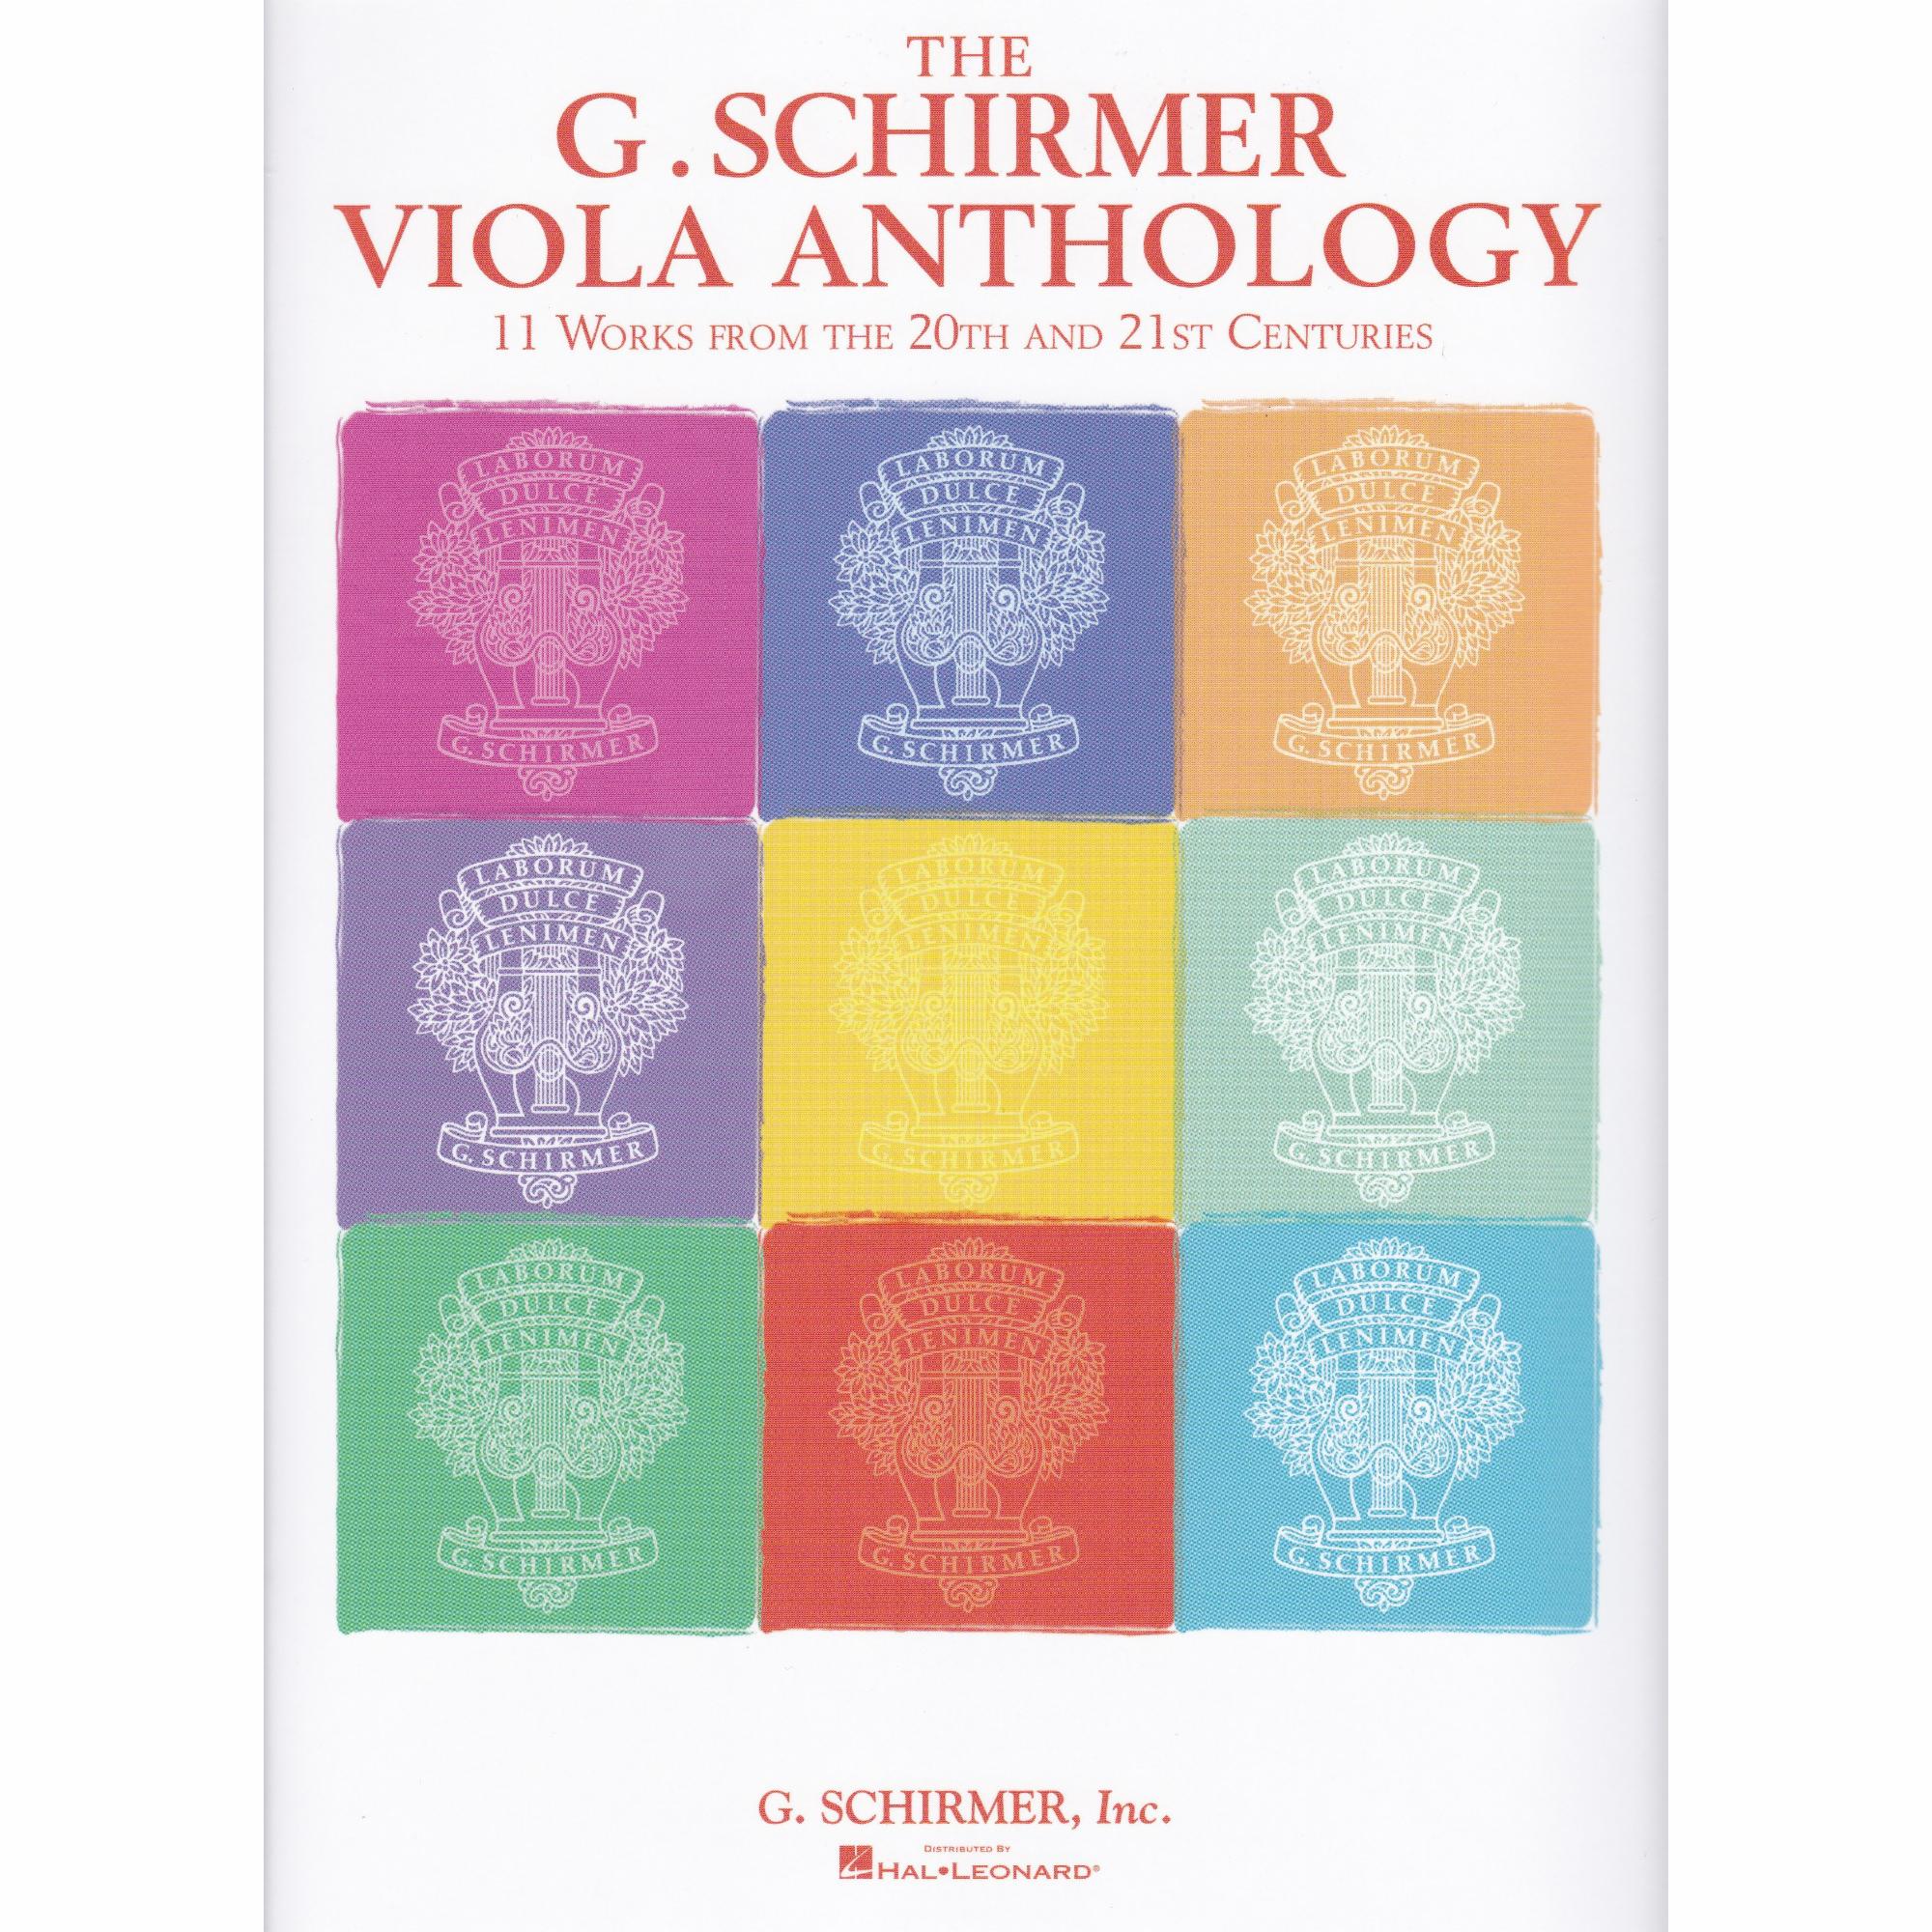 The G. Schirmer Viola Anthology